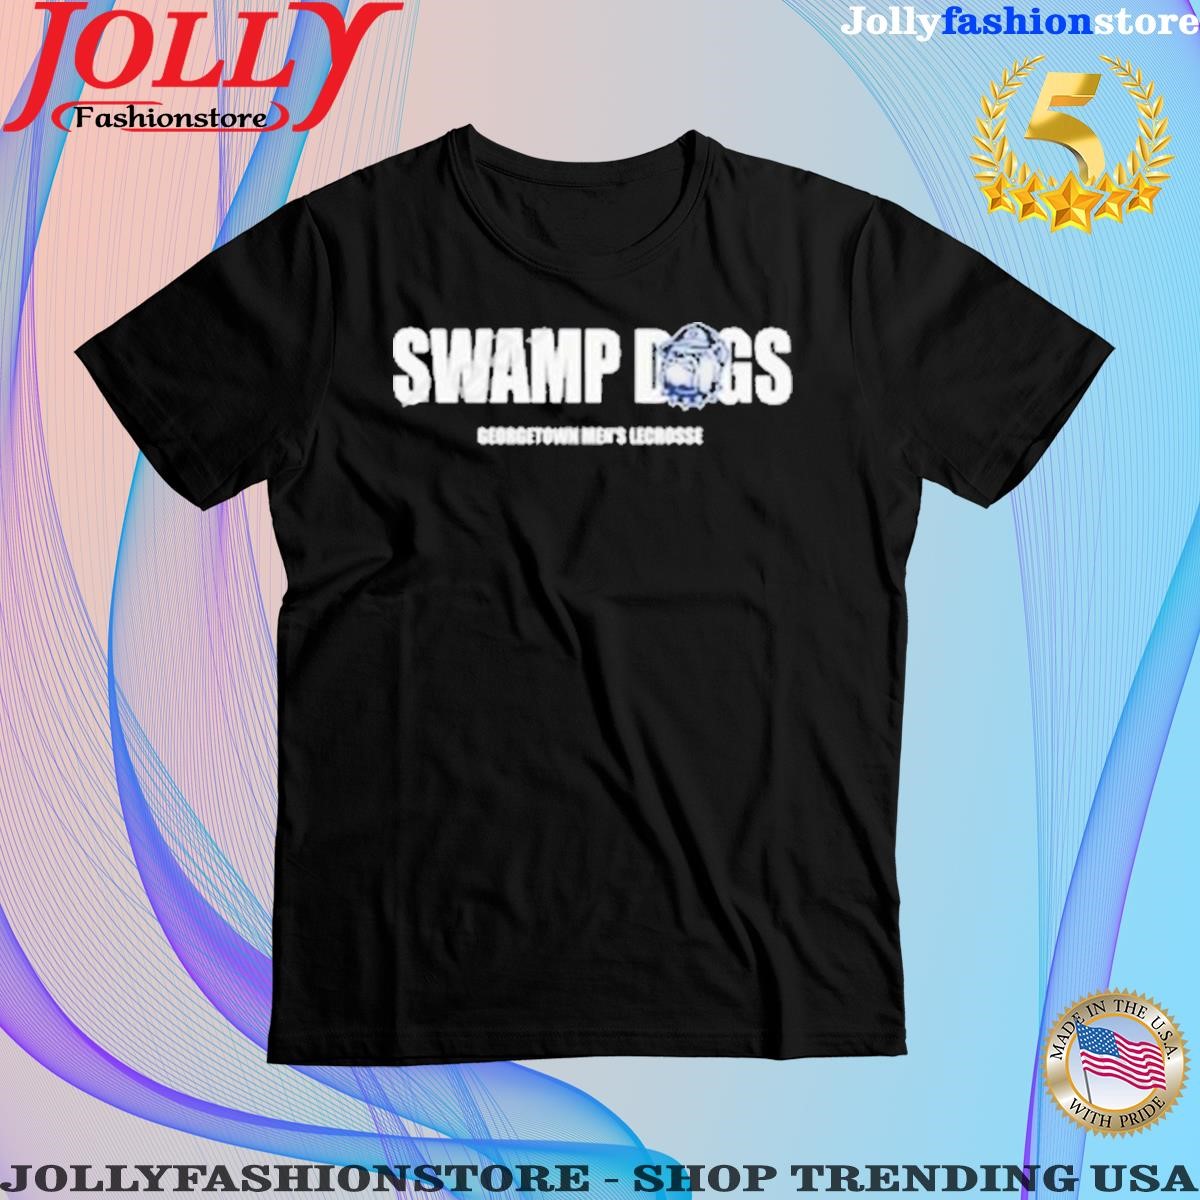 Swamp dogs georgetown men's lacrosse shirt